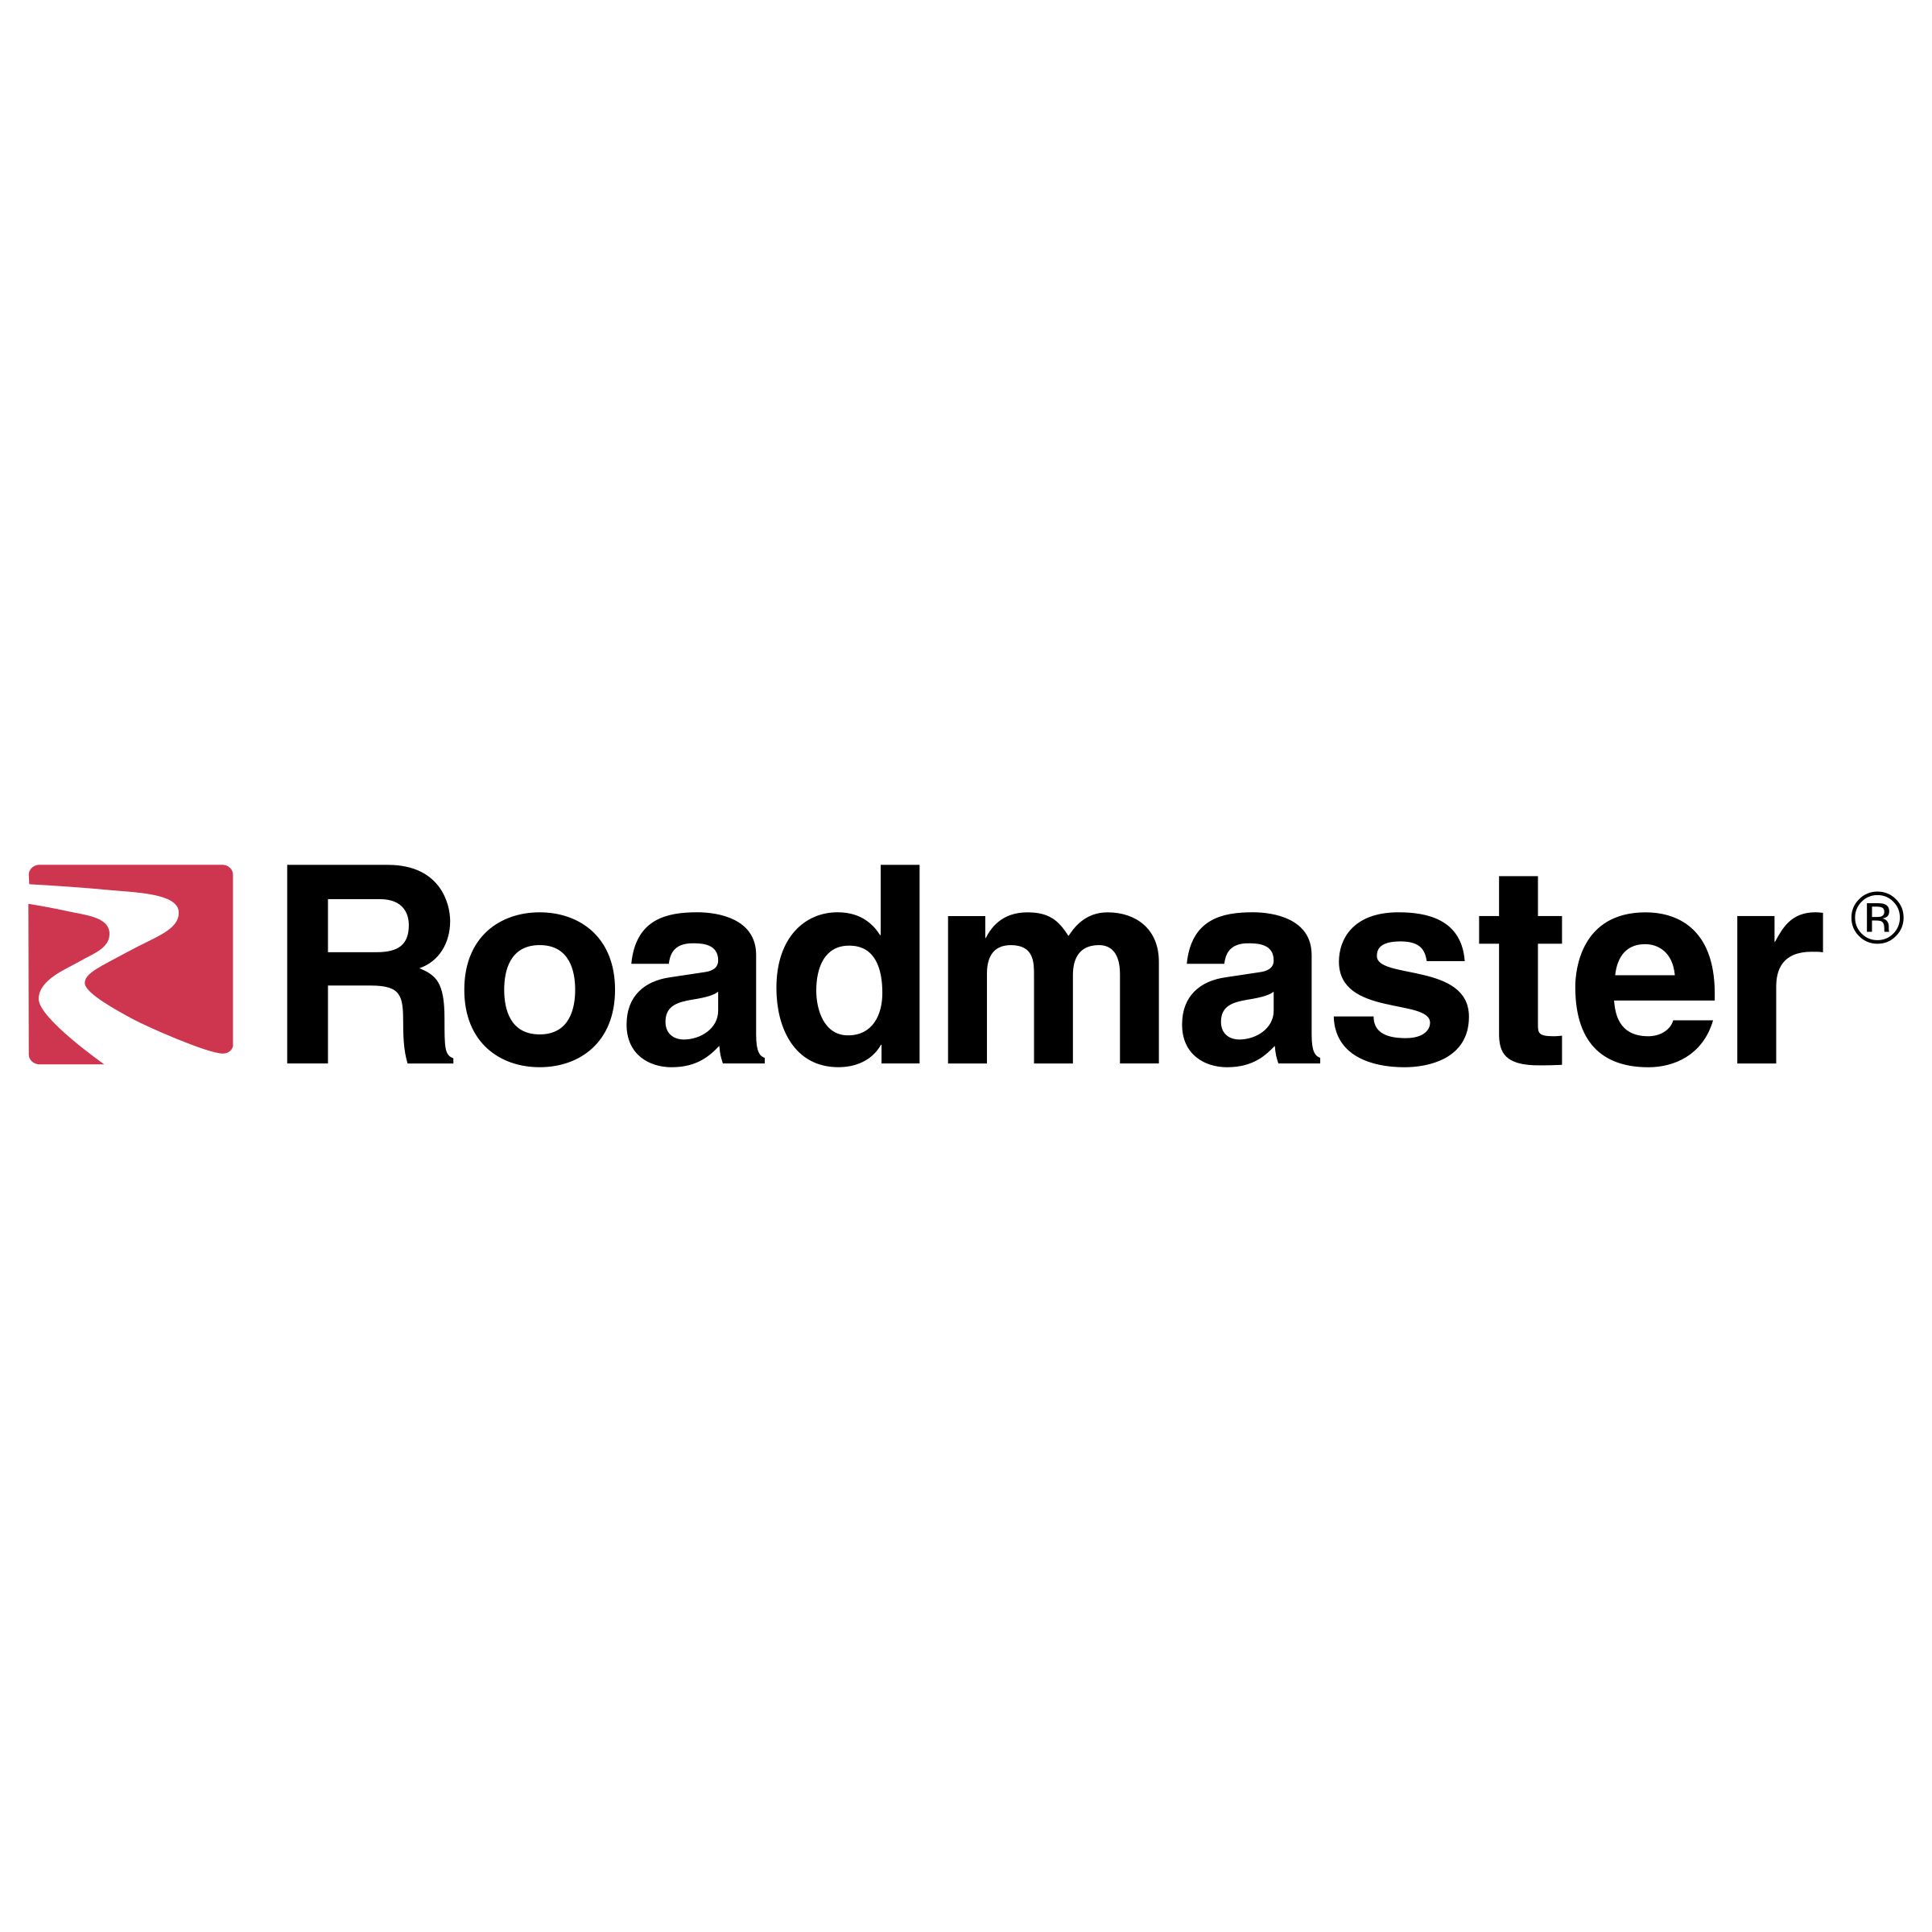 Roadmaster Logo - Roadmaster Logo PNG Transparent & SVG Vector